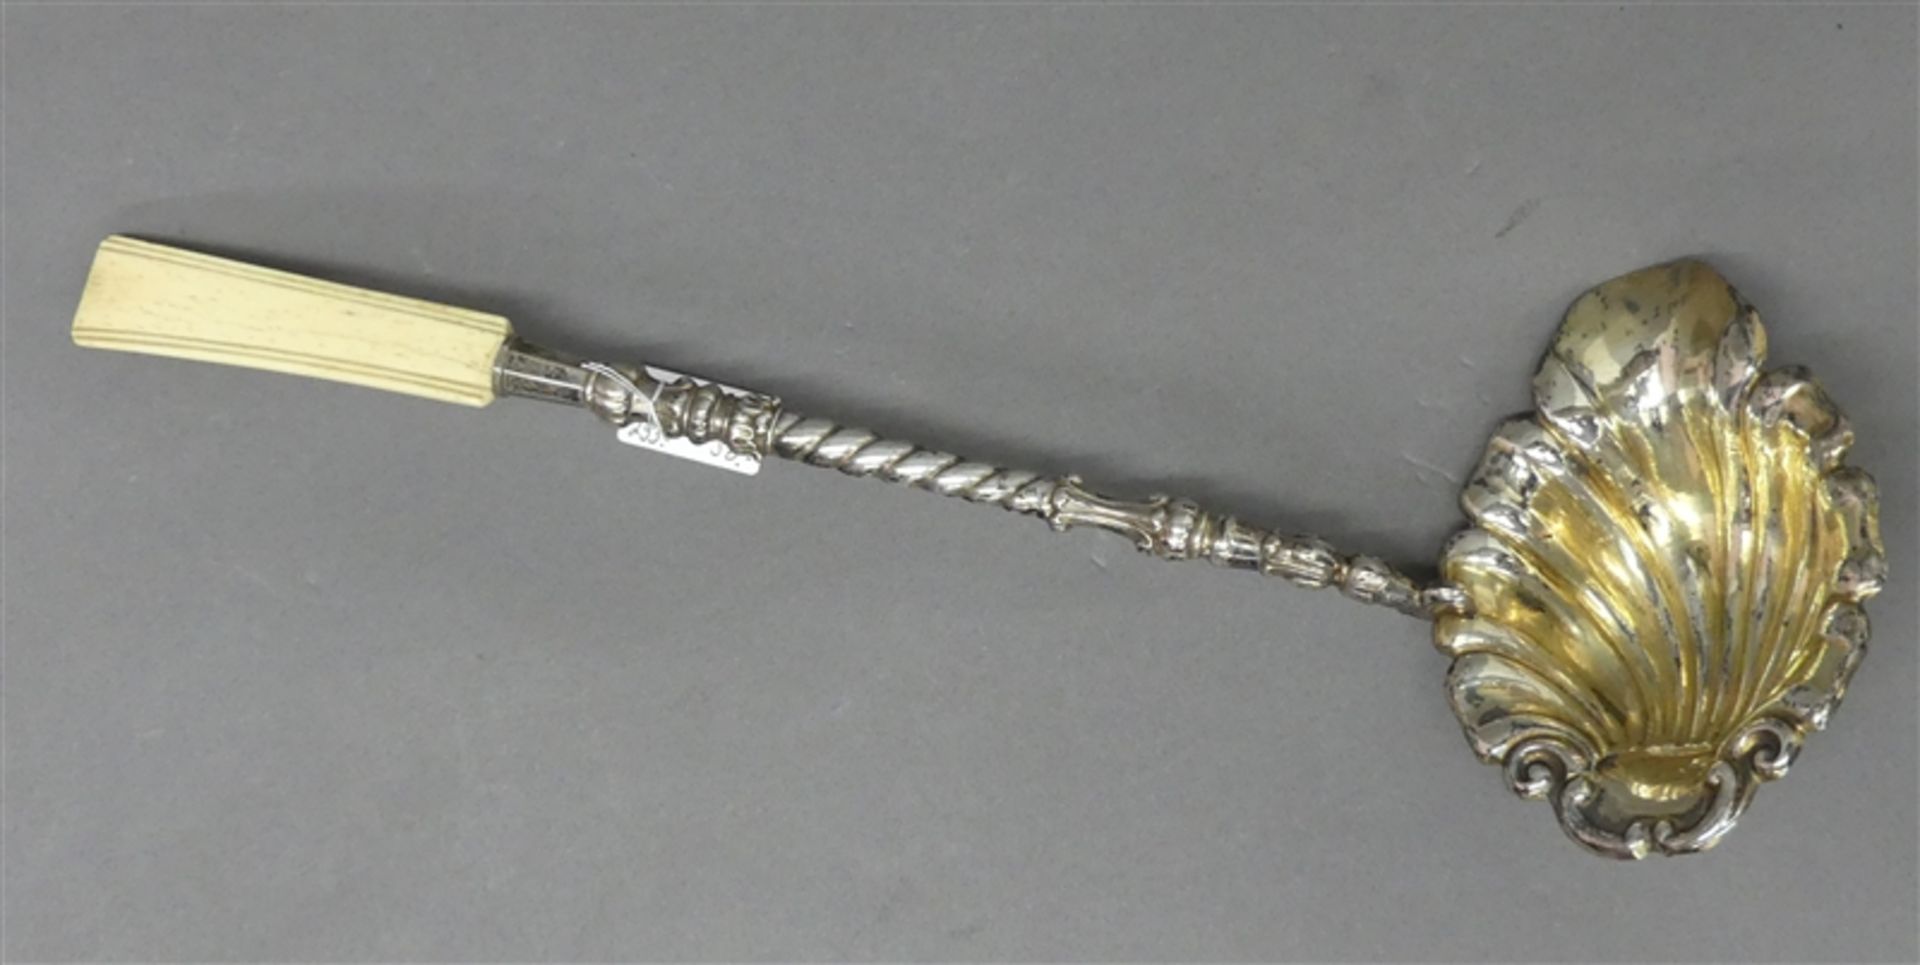 Schöpfkelle 19. Jh., barocke Form, Metall, versilbert, teilvergoldet, Elfenbeingriff, l 37 cm,